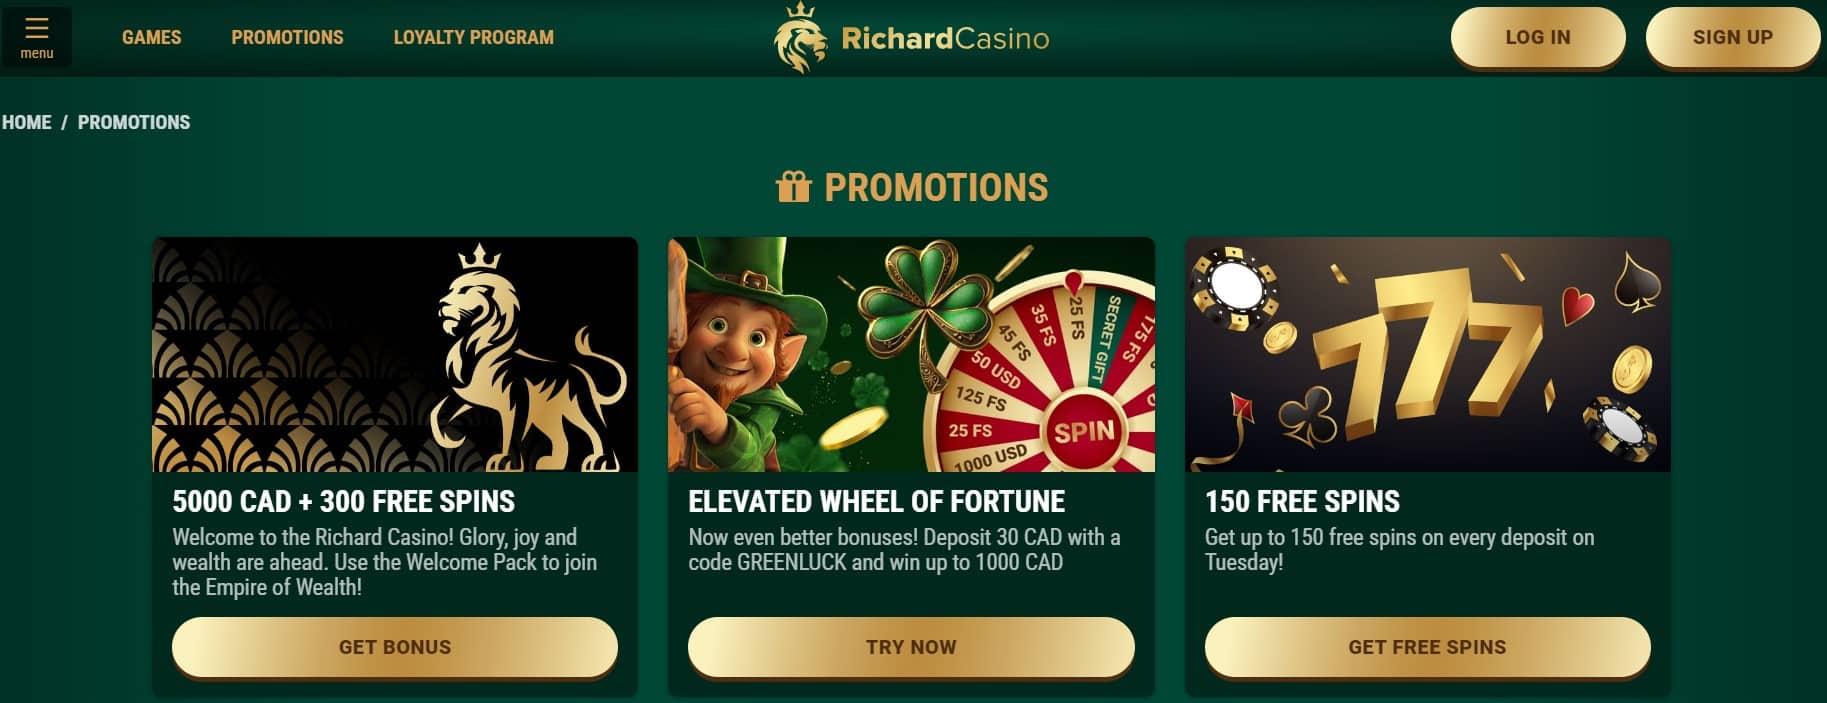 richard casino promotion